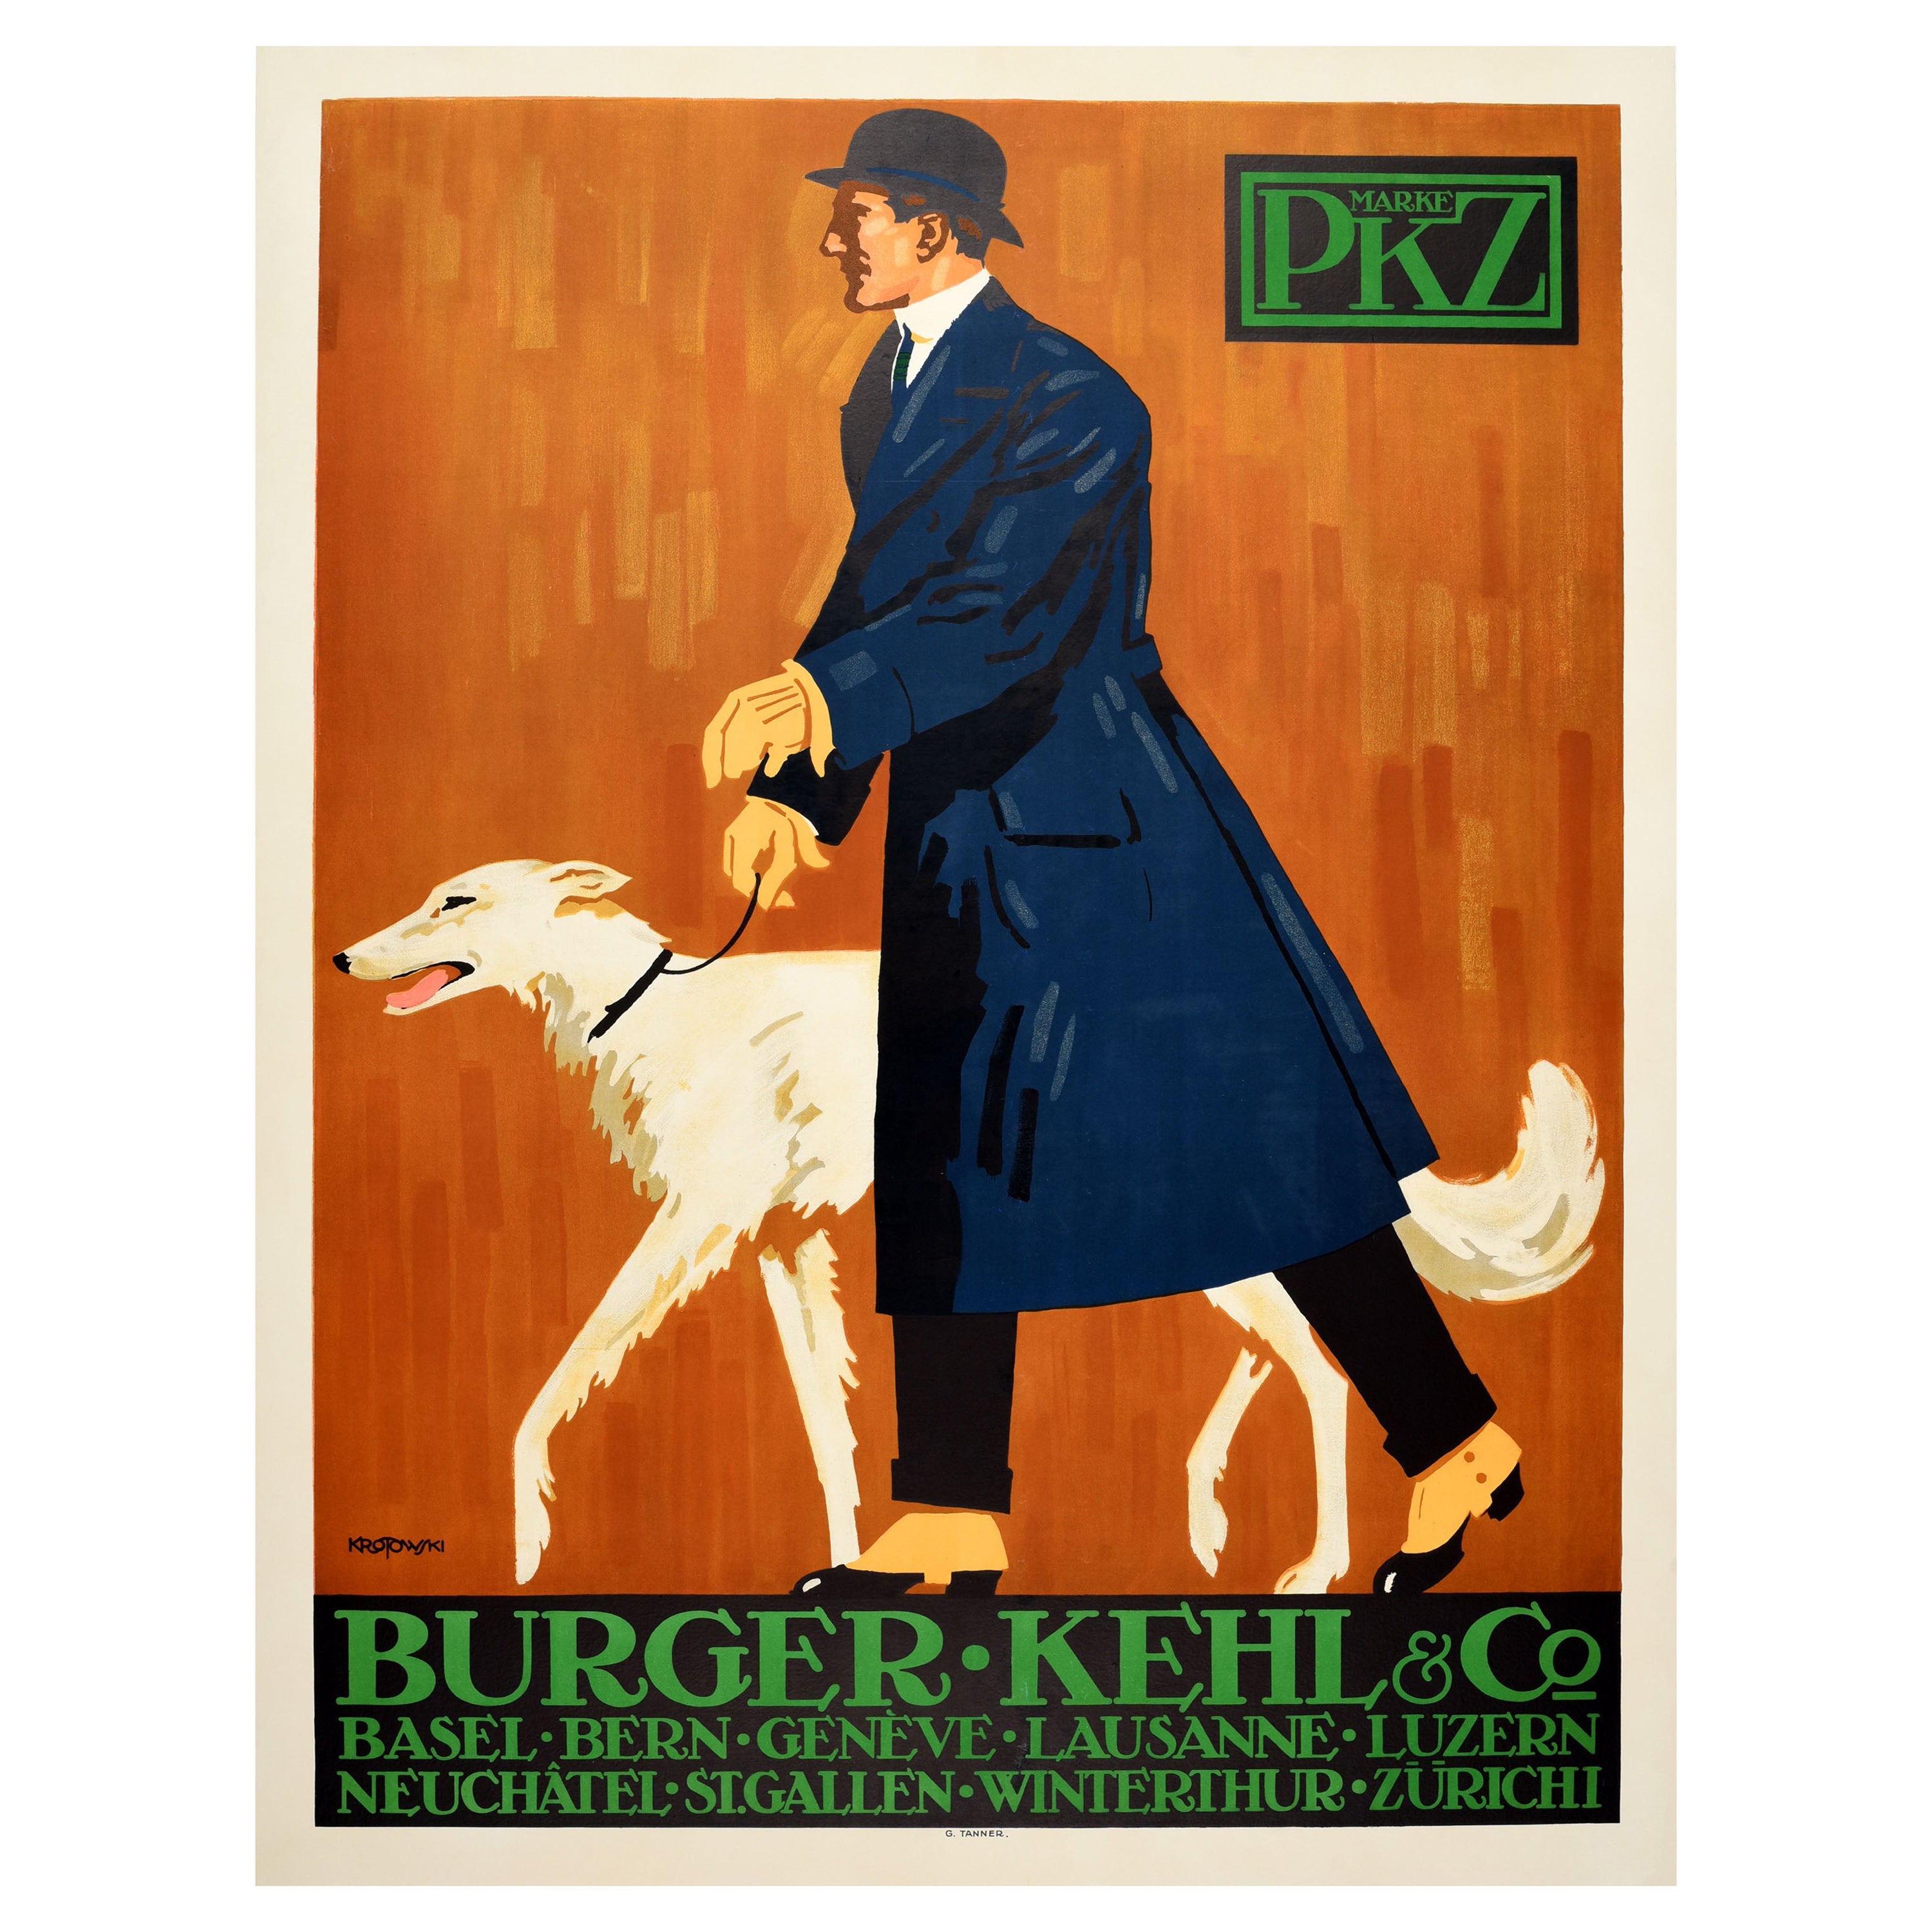 Original Antique Advertising Poster PKZ Burger Kehl & Co Men's Fashion Design